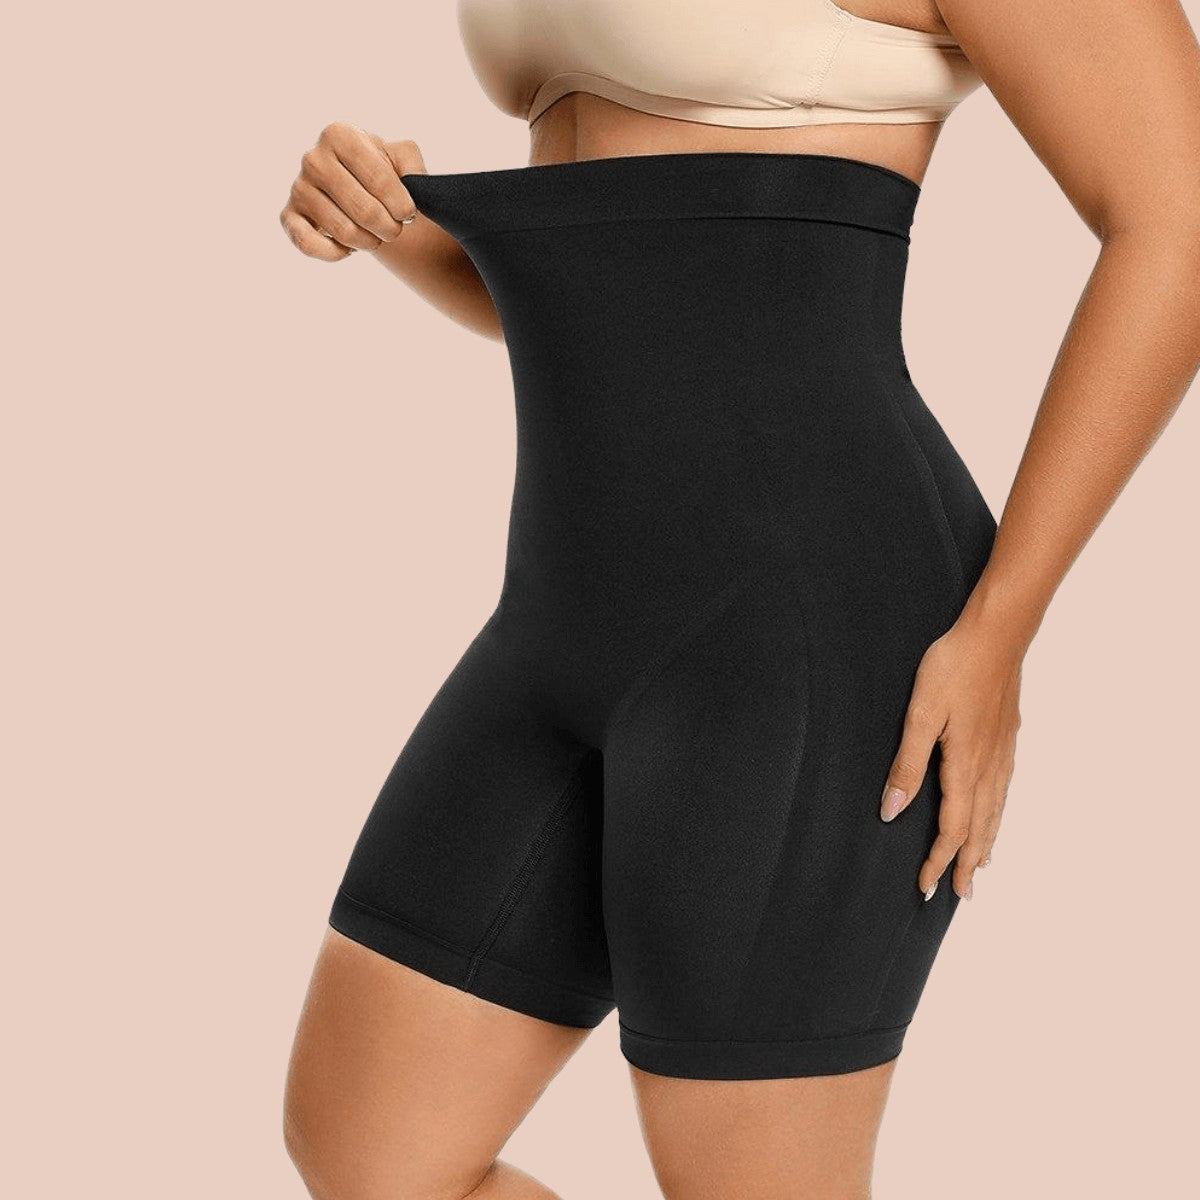 Women's Tummy Control Shaping Shorts